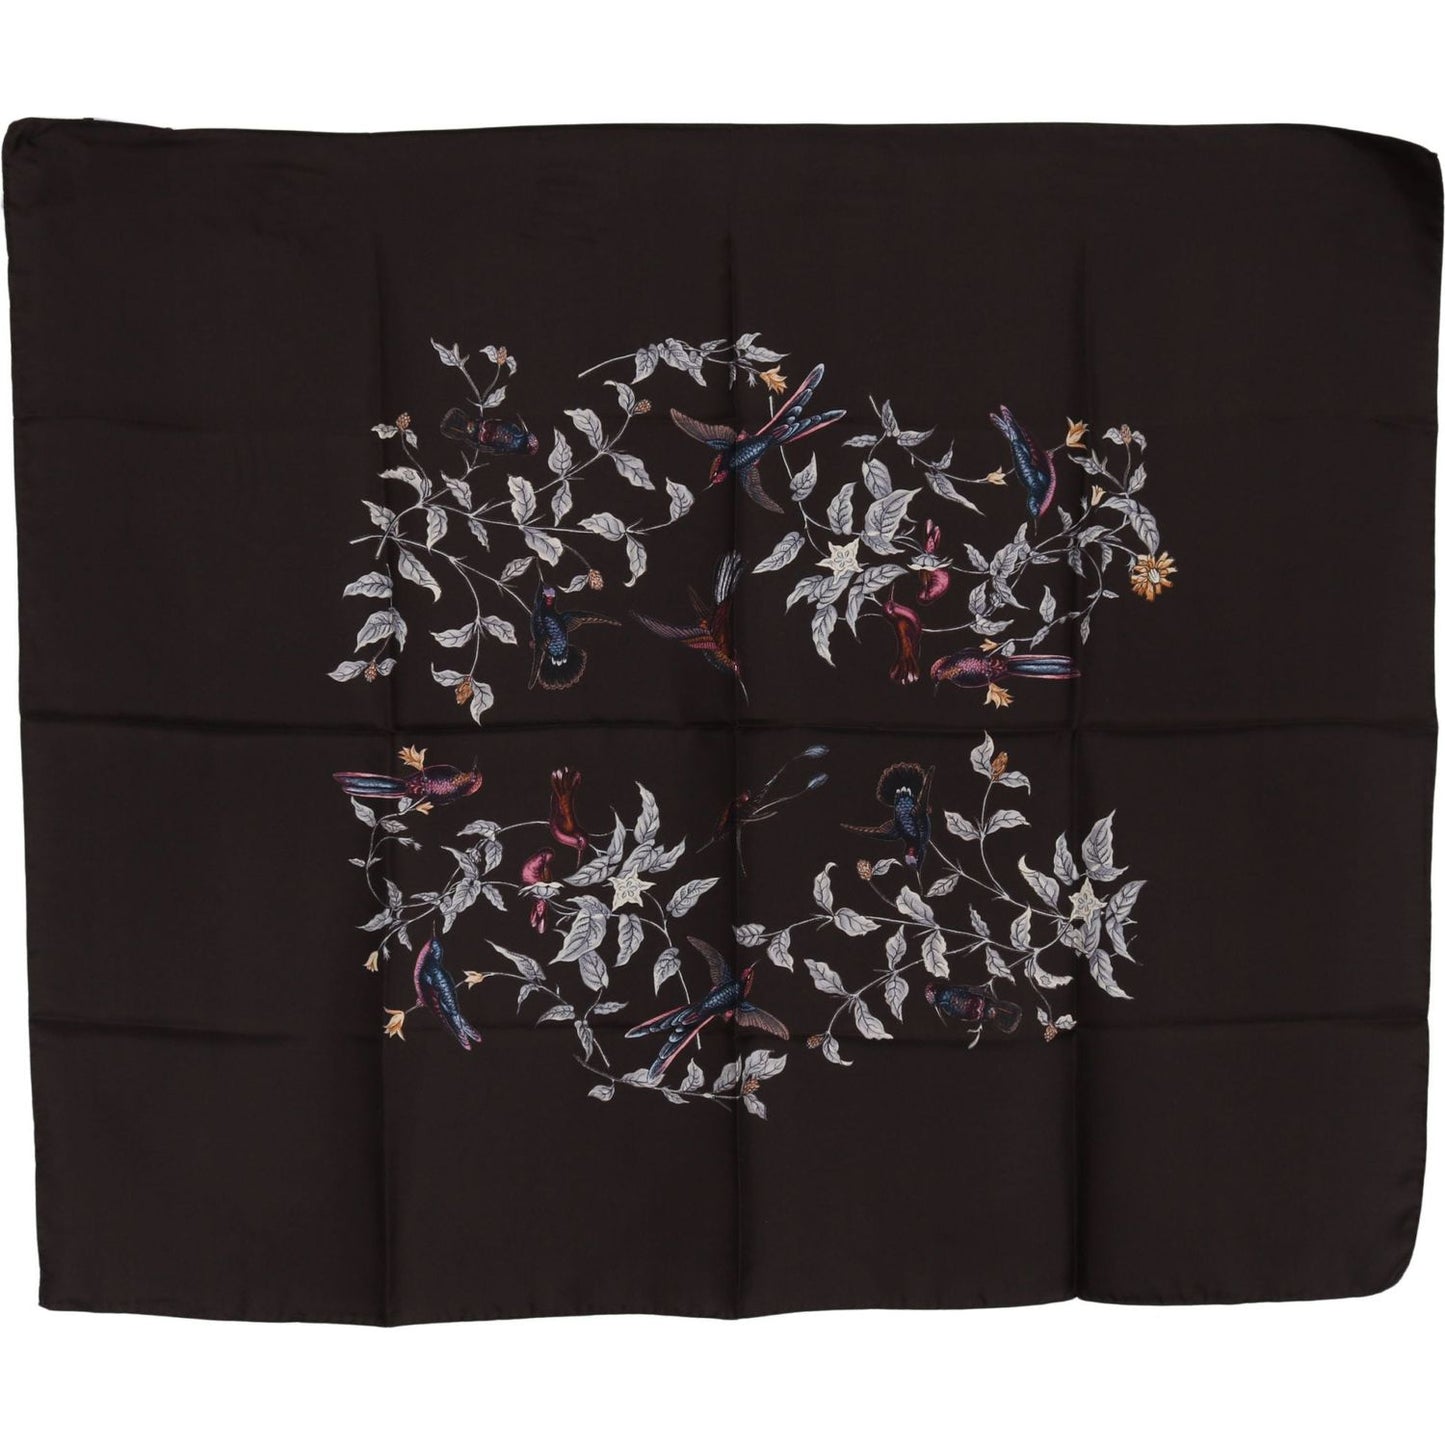 Dolce & Gabbana Elegant Silk Scarf Wrap in Luxe Brown Silk Wrap Shawls brown-100-silk-bird-print-wrap-80cm-x-95cm-rrp-scarf IMG_3730-scaled-372044dc-e94.jpg